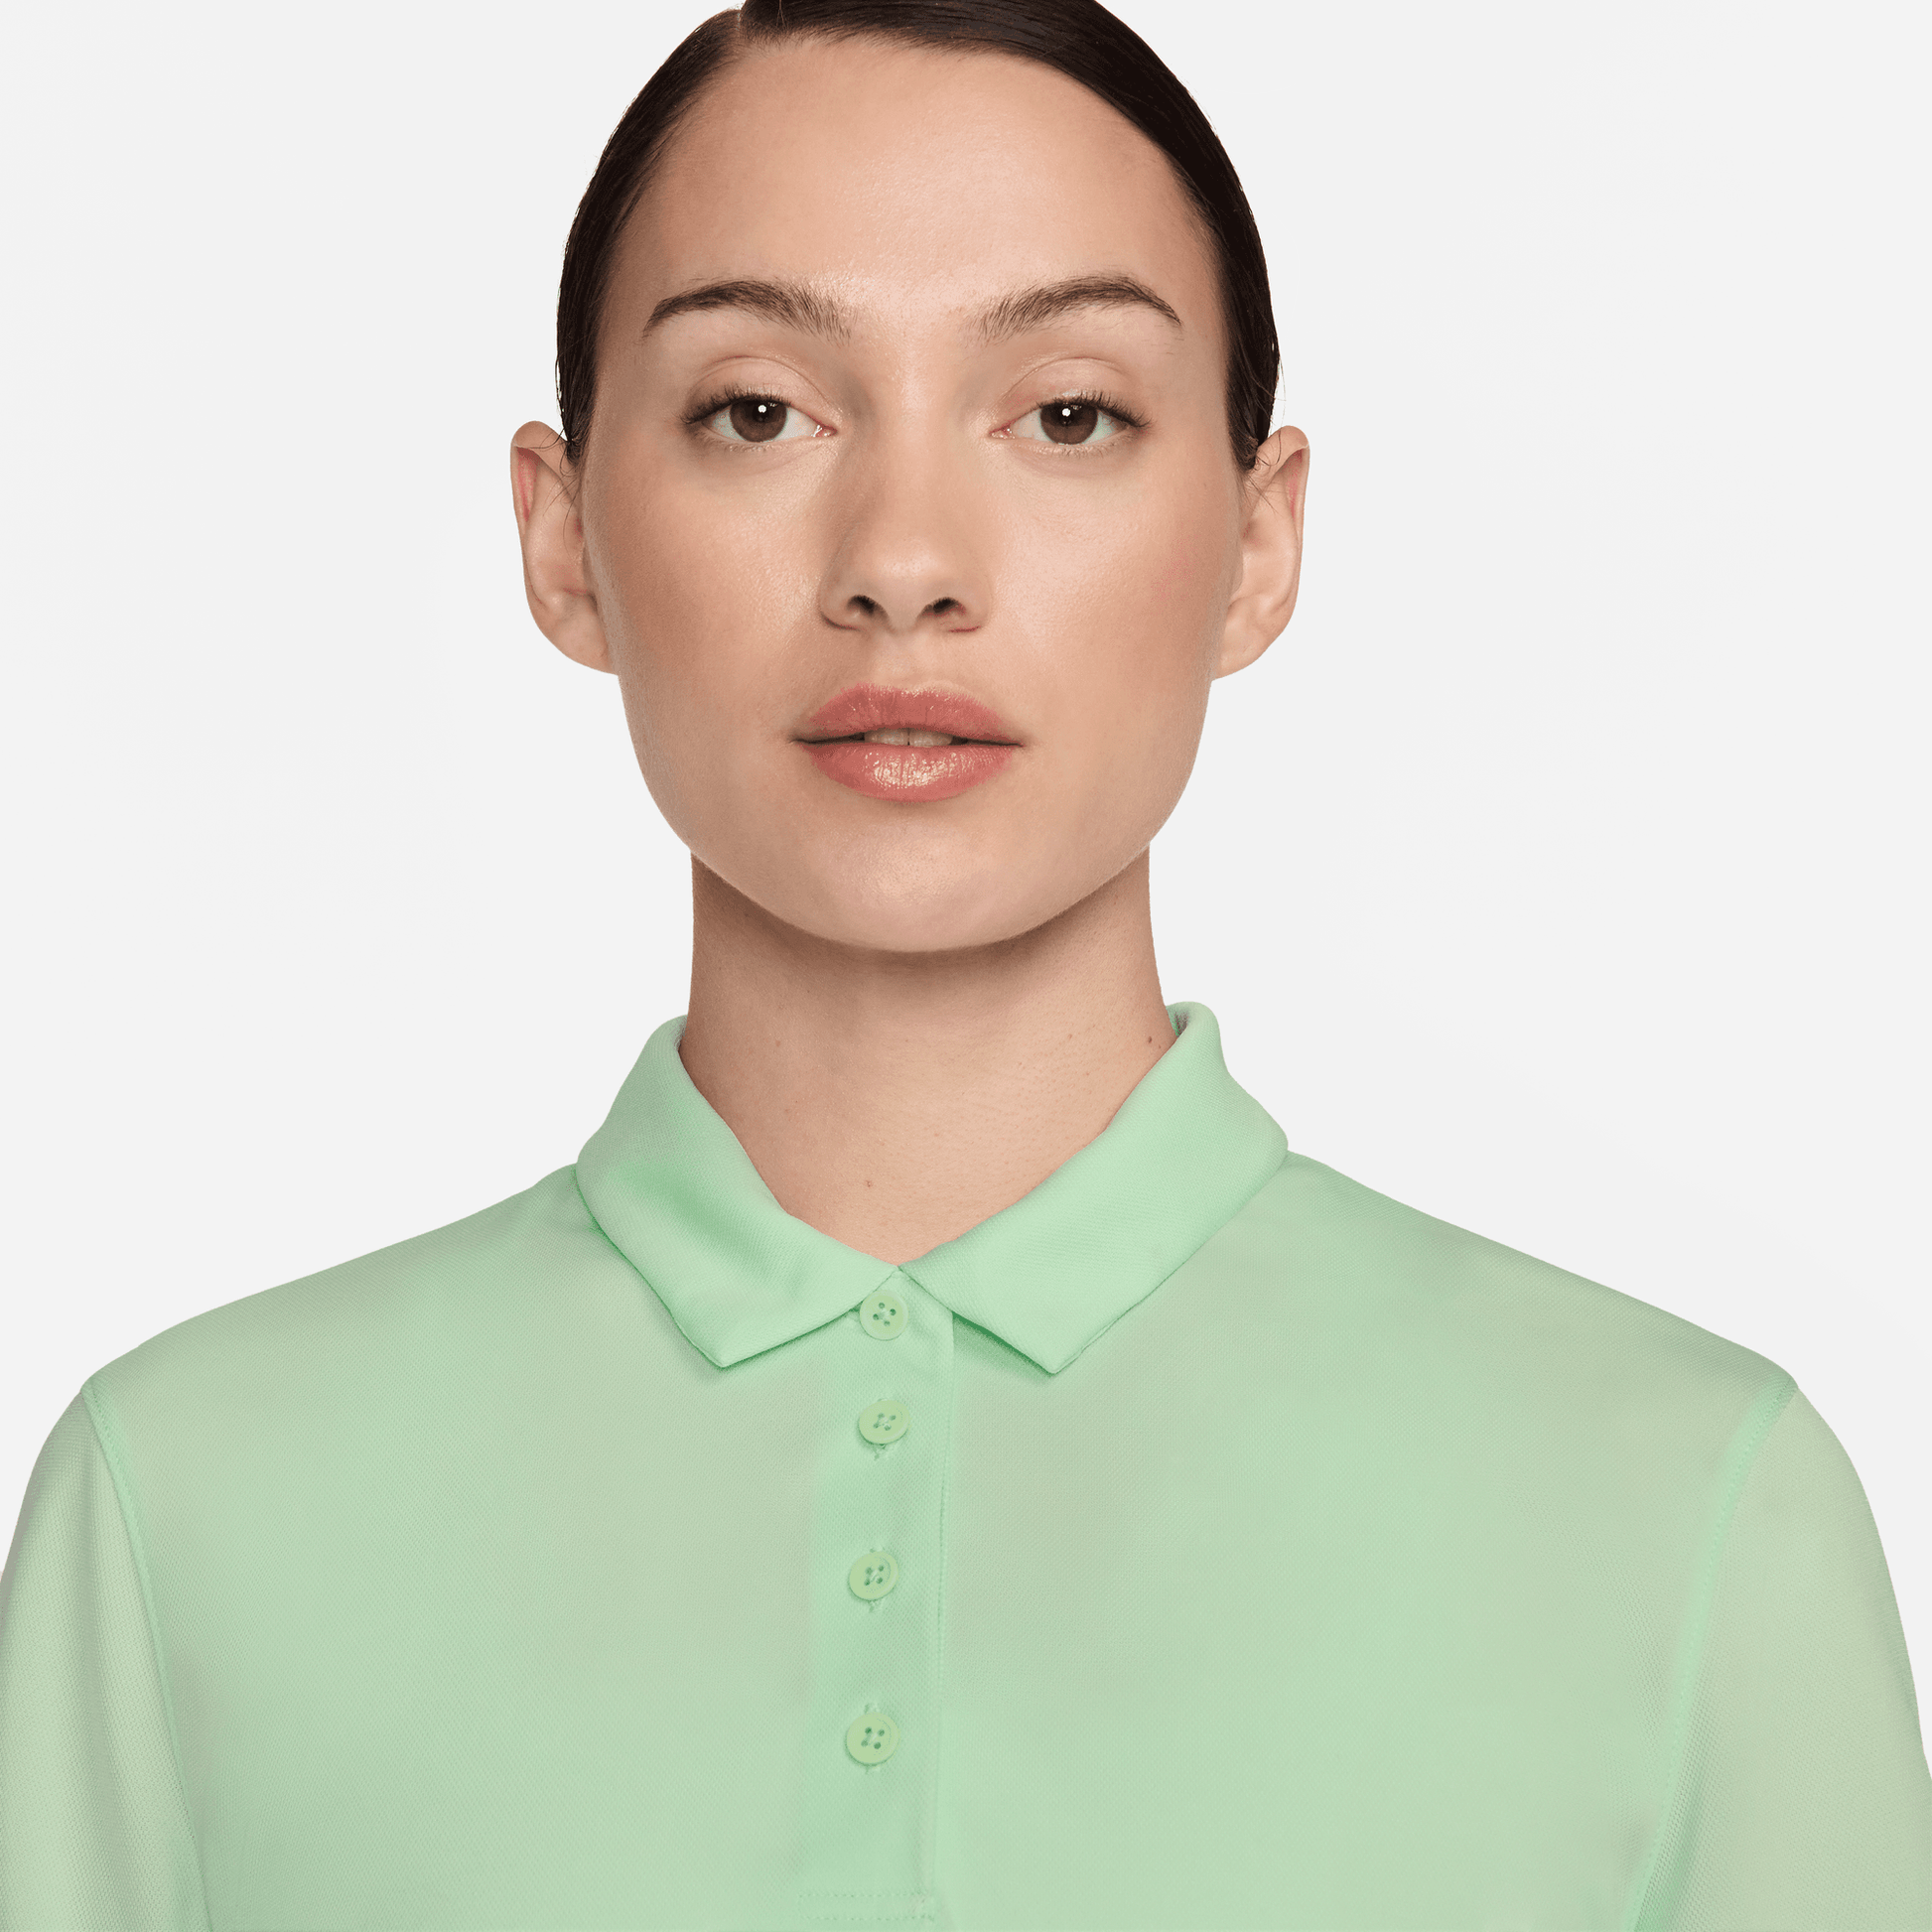 Nike Ladies Short Sleeve Dri-FIT Golf Polo in Vapor Green